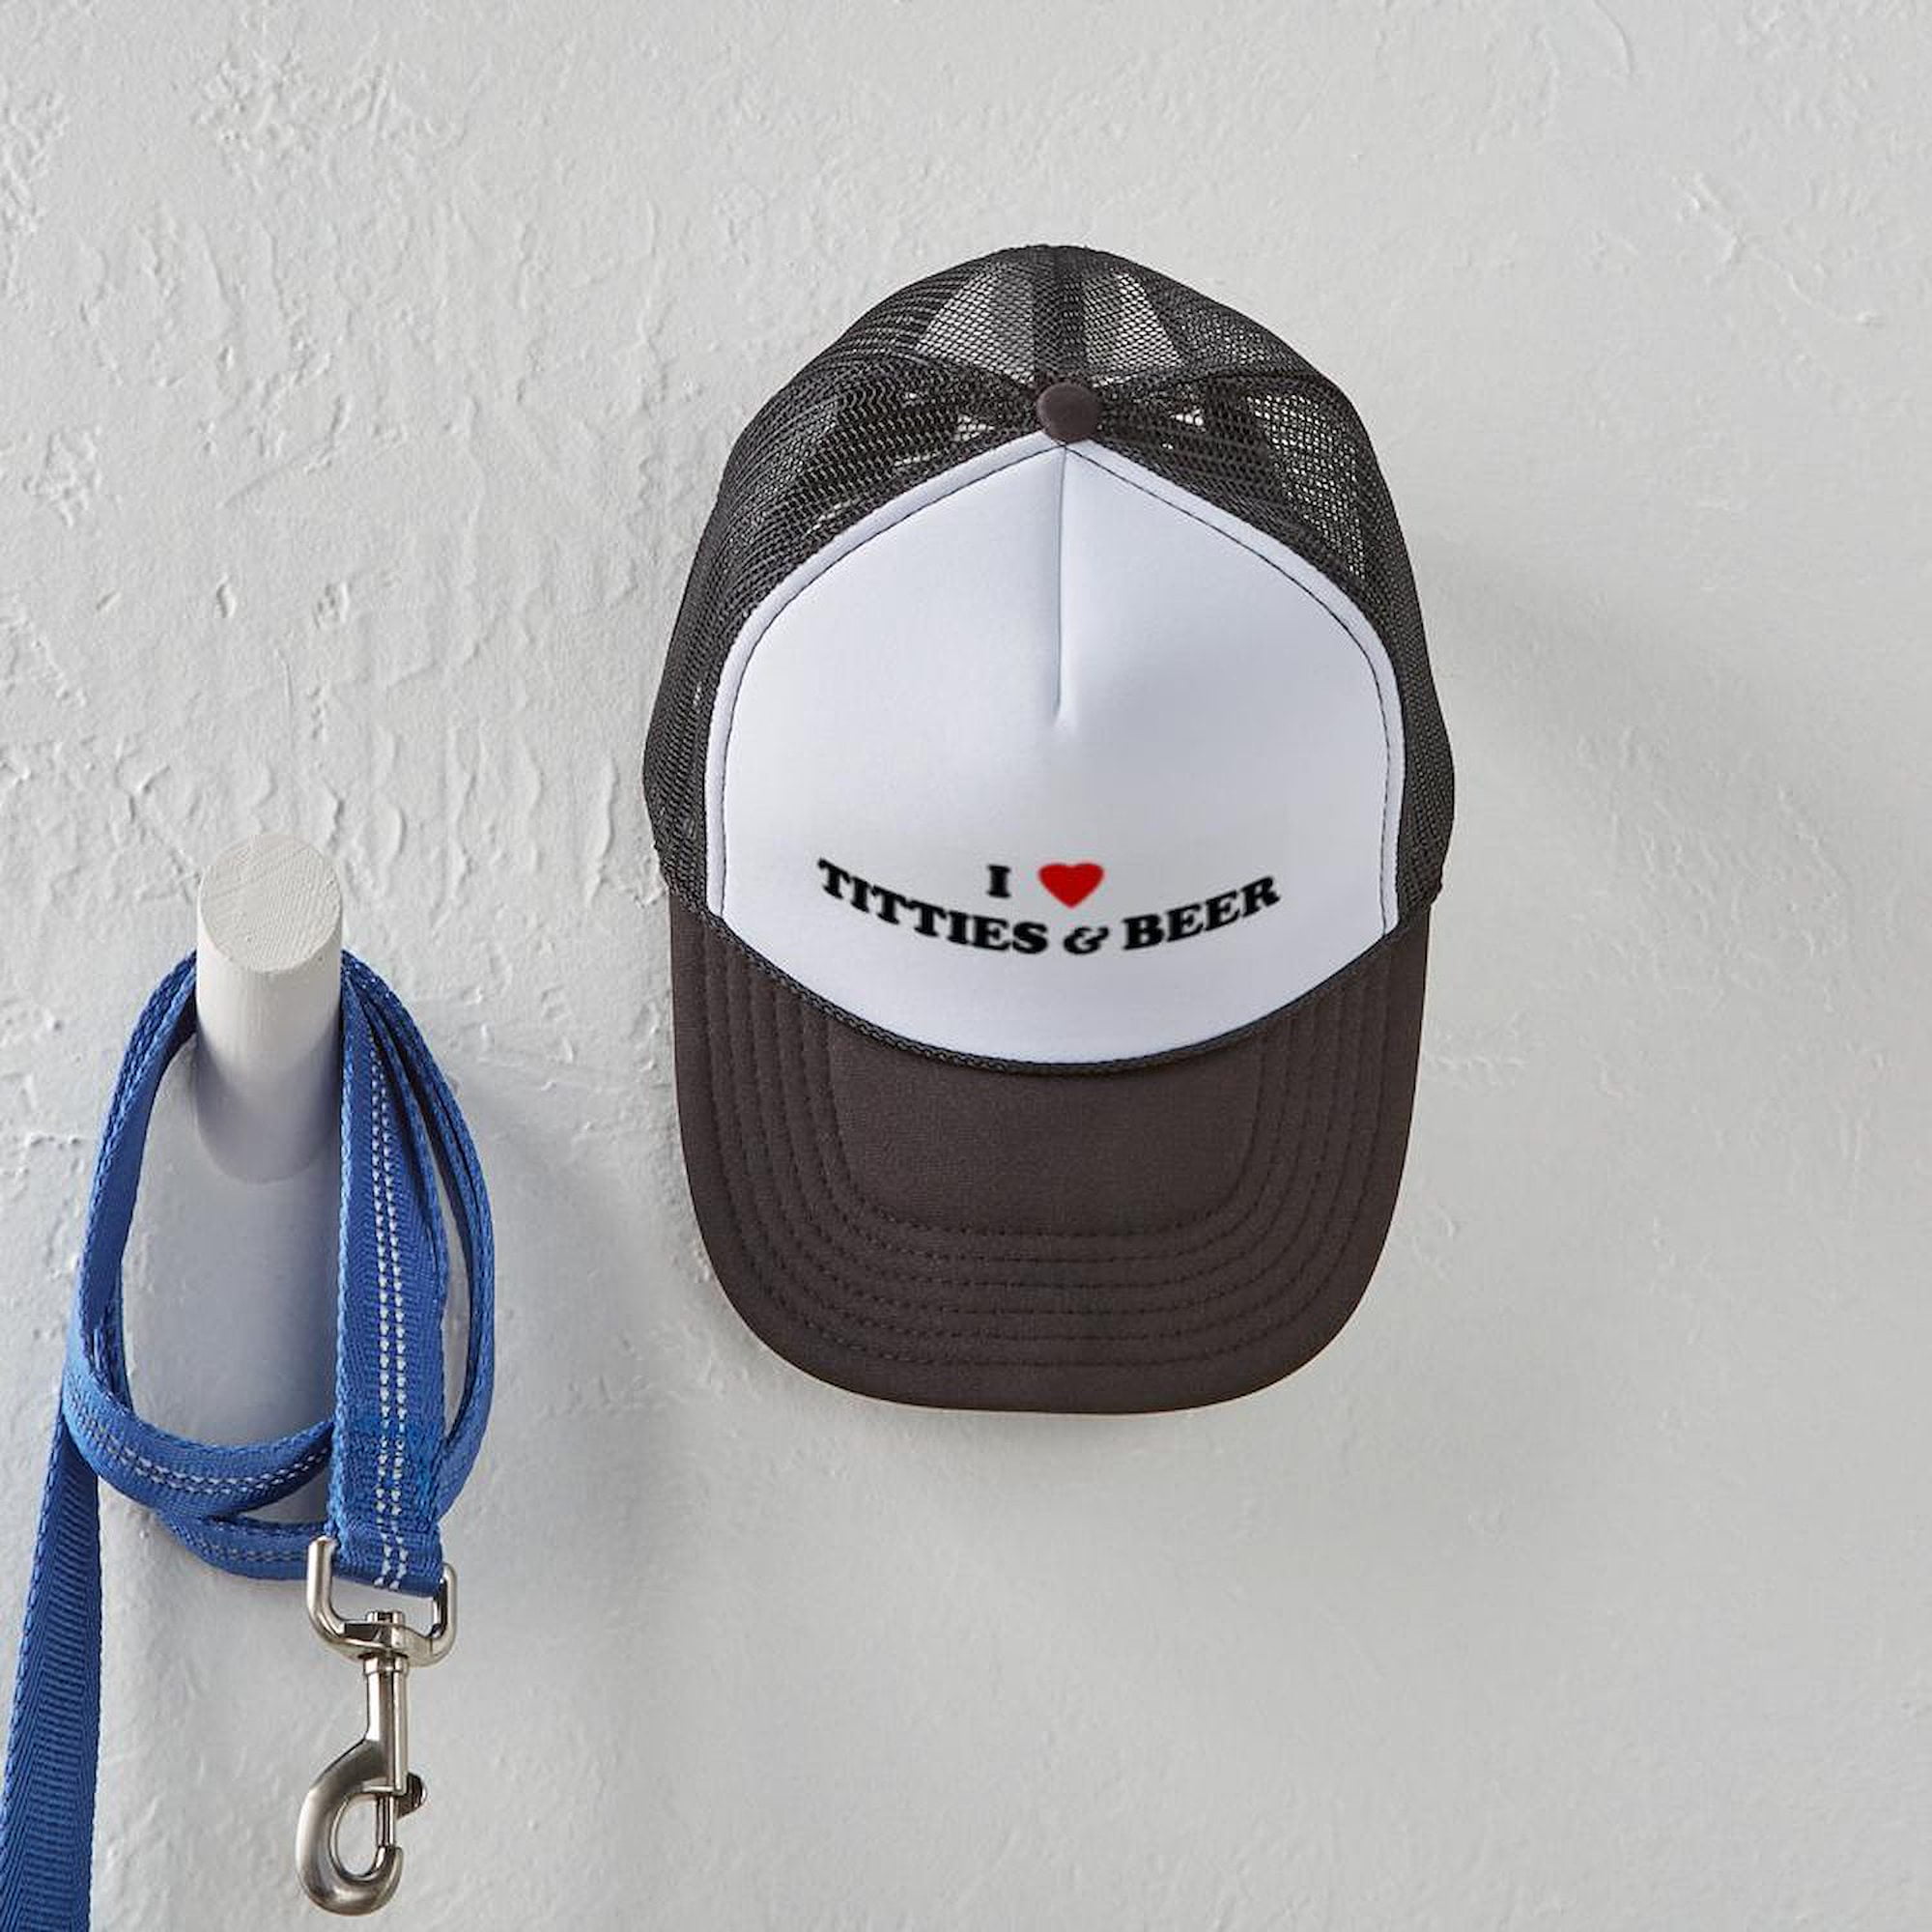 CafePress - I Love TITTIES & BEER - Unique Trucker Hat, Classic Baseball Hat